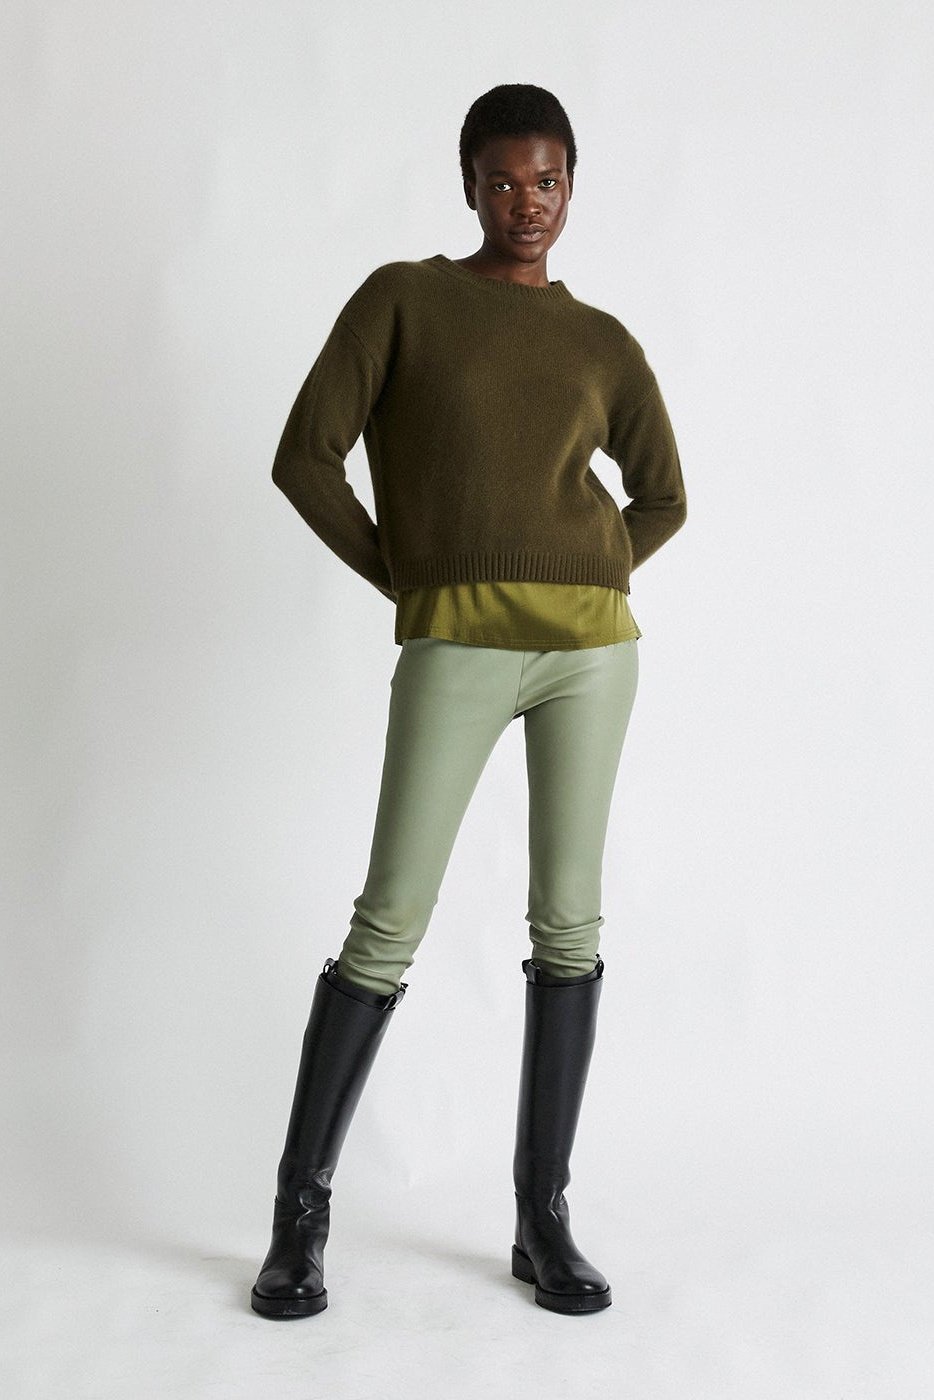 +Beryll Holly Cashmere Sweater | Kelp Green - +Beryll Holly Cashmere Sweater | Kelp Green - +Beryll Worn By Good People